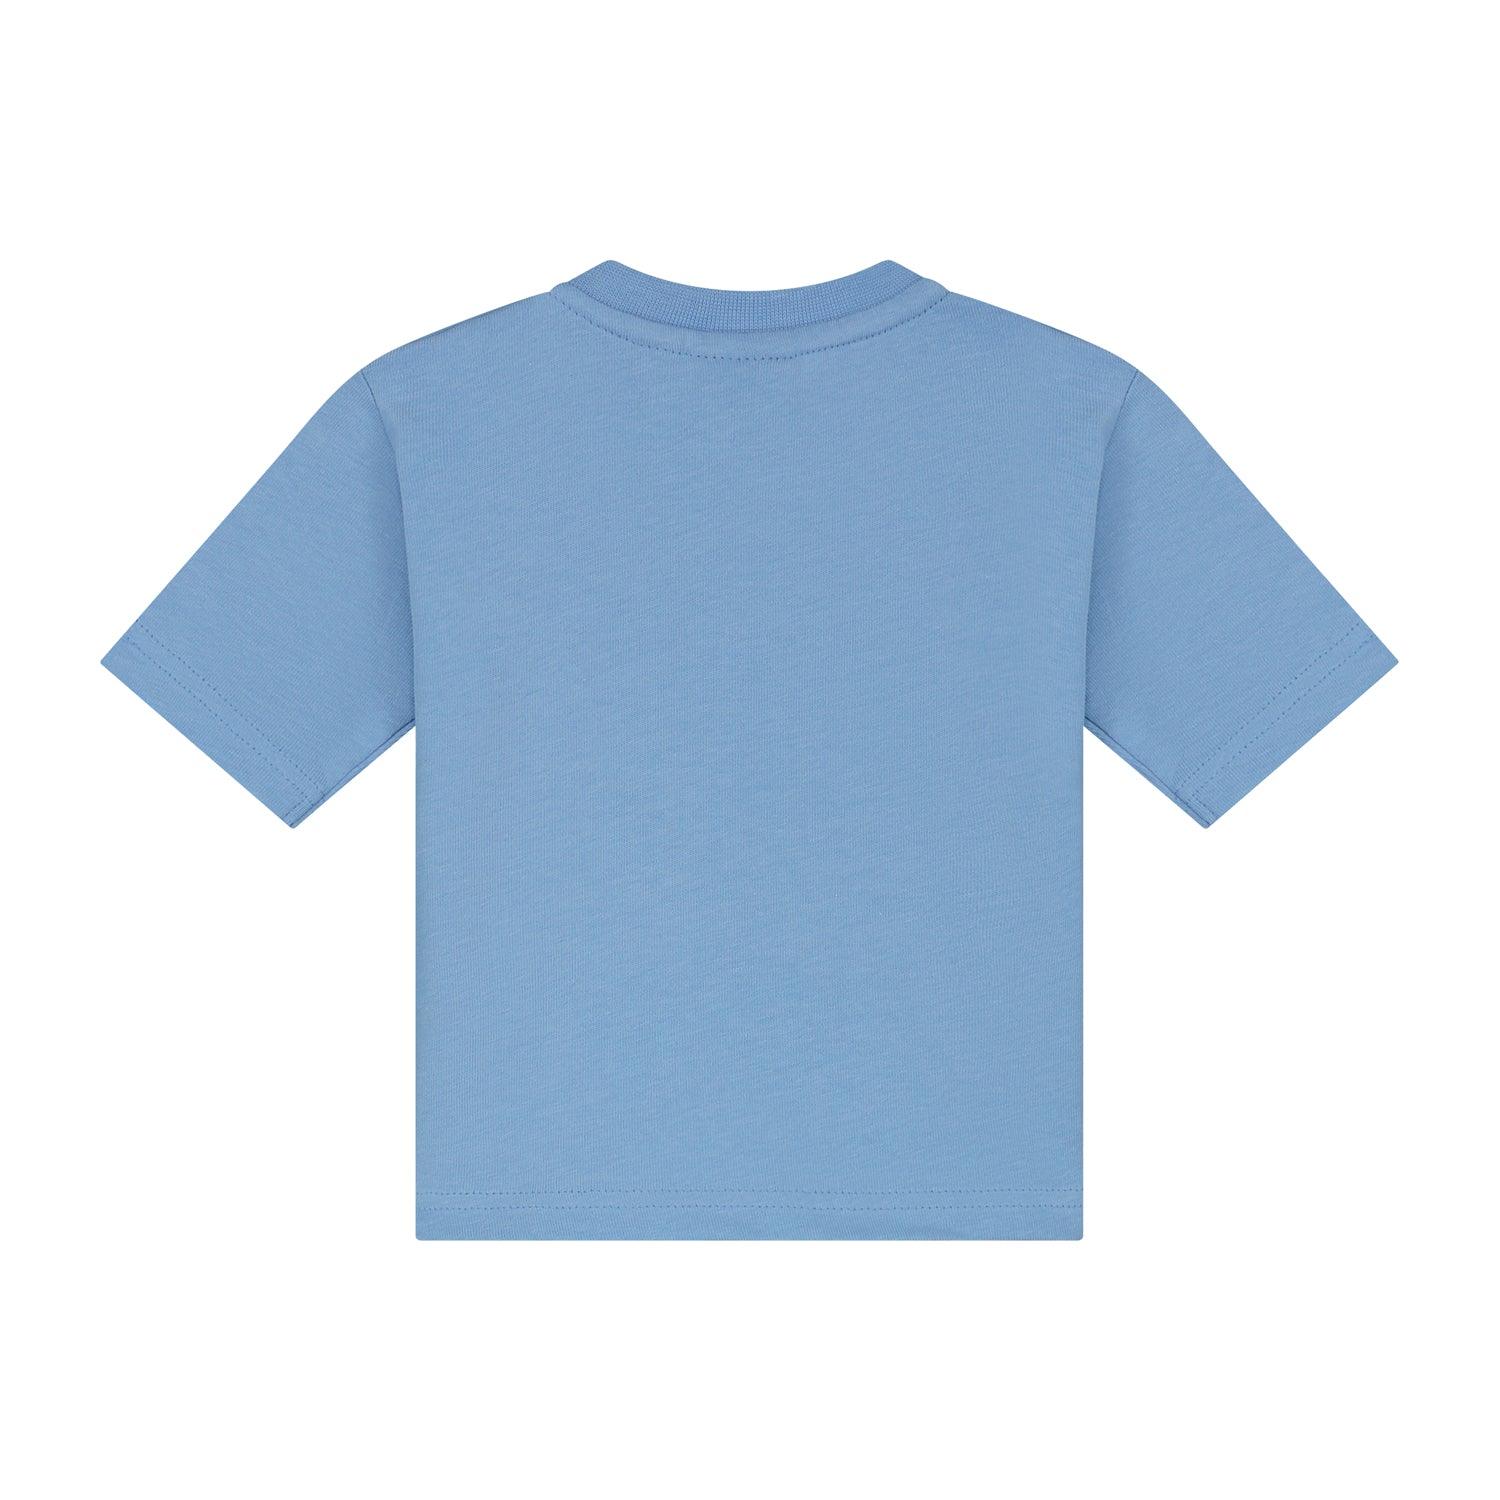 PALMA summerset | babyblauw - KIDS - Frenky S -Vader en zoon kleding